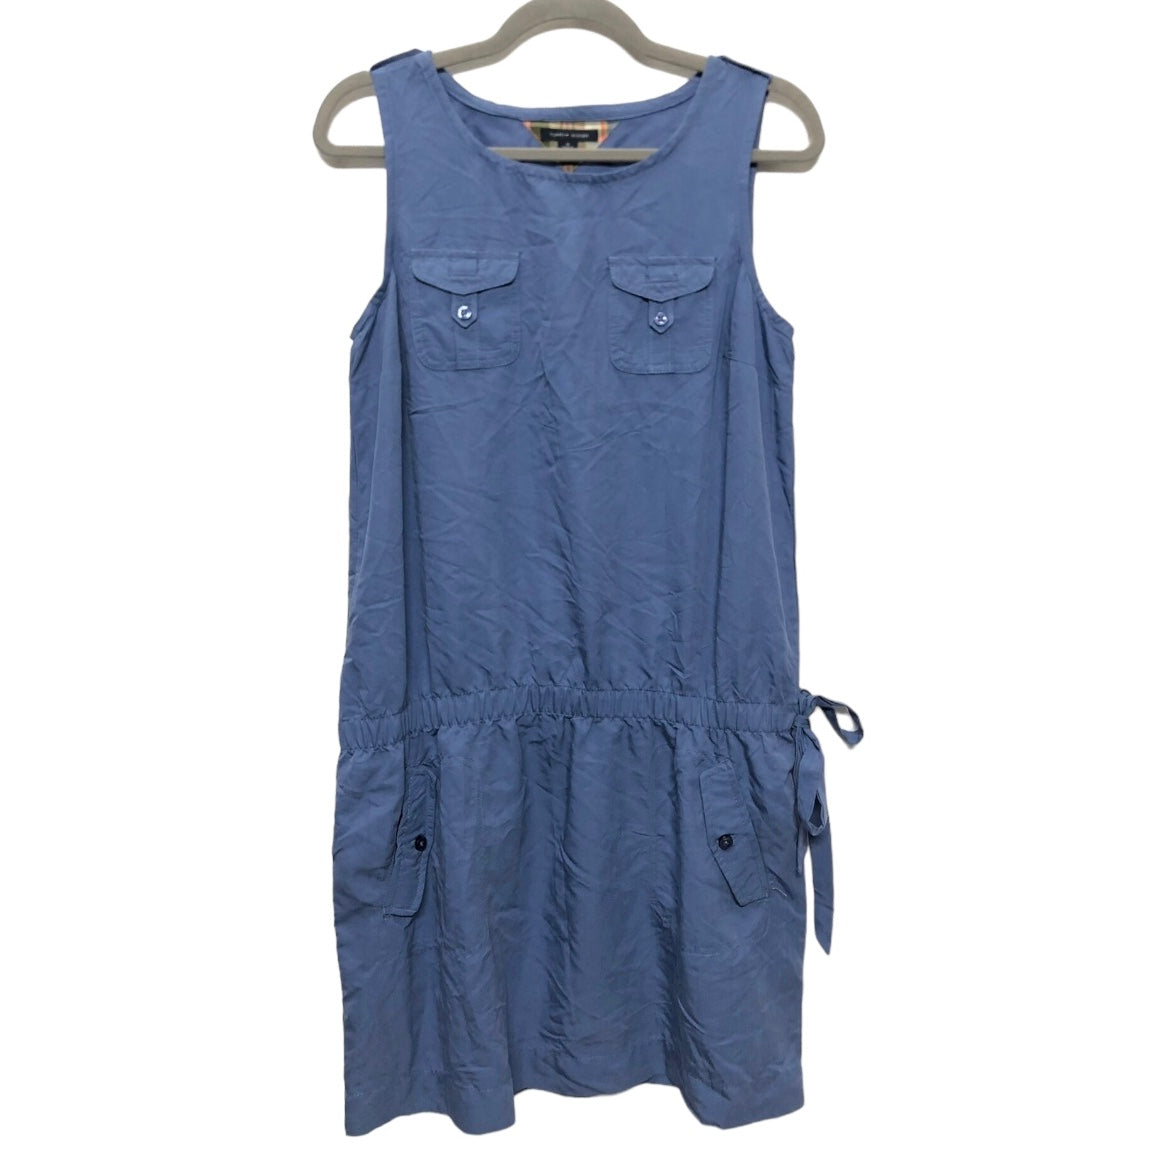 Blue Dress Casual Short Tommy Hilfiger, Size M